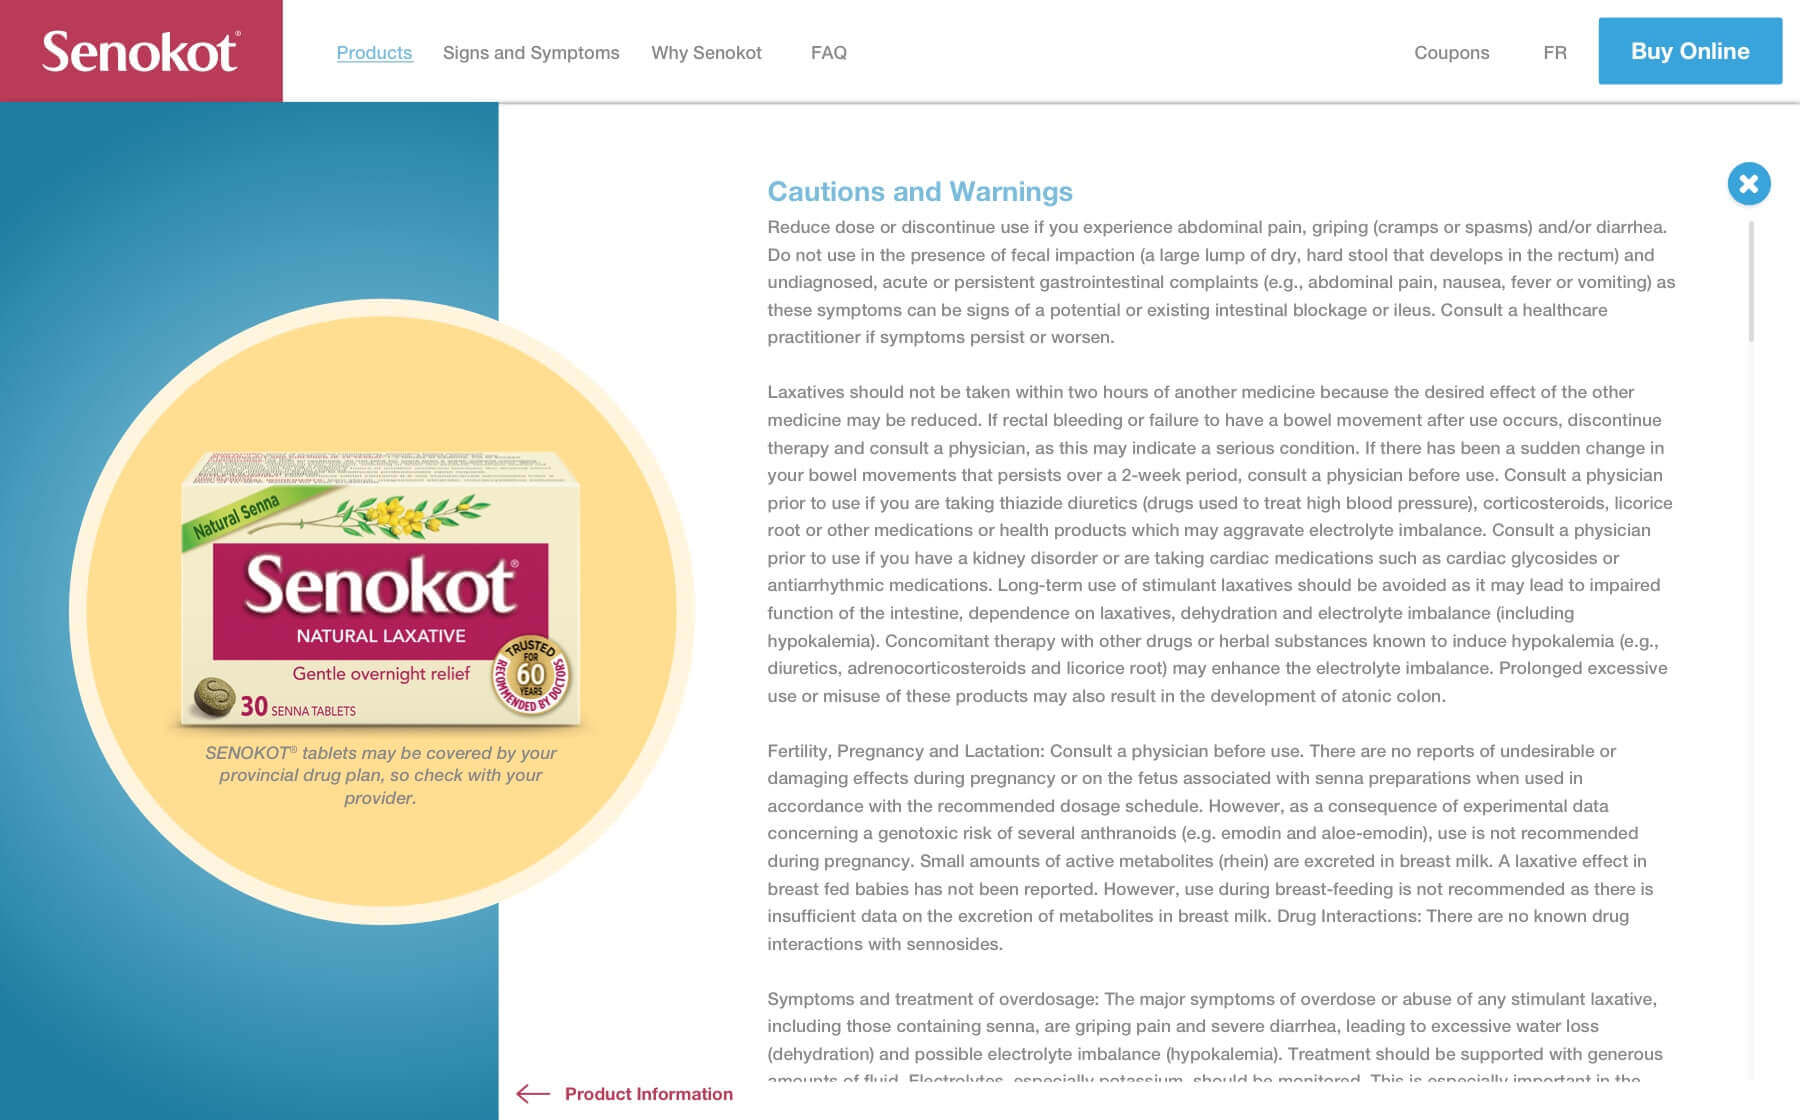 Senokot website products image one